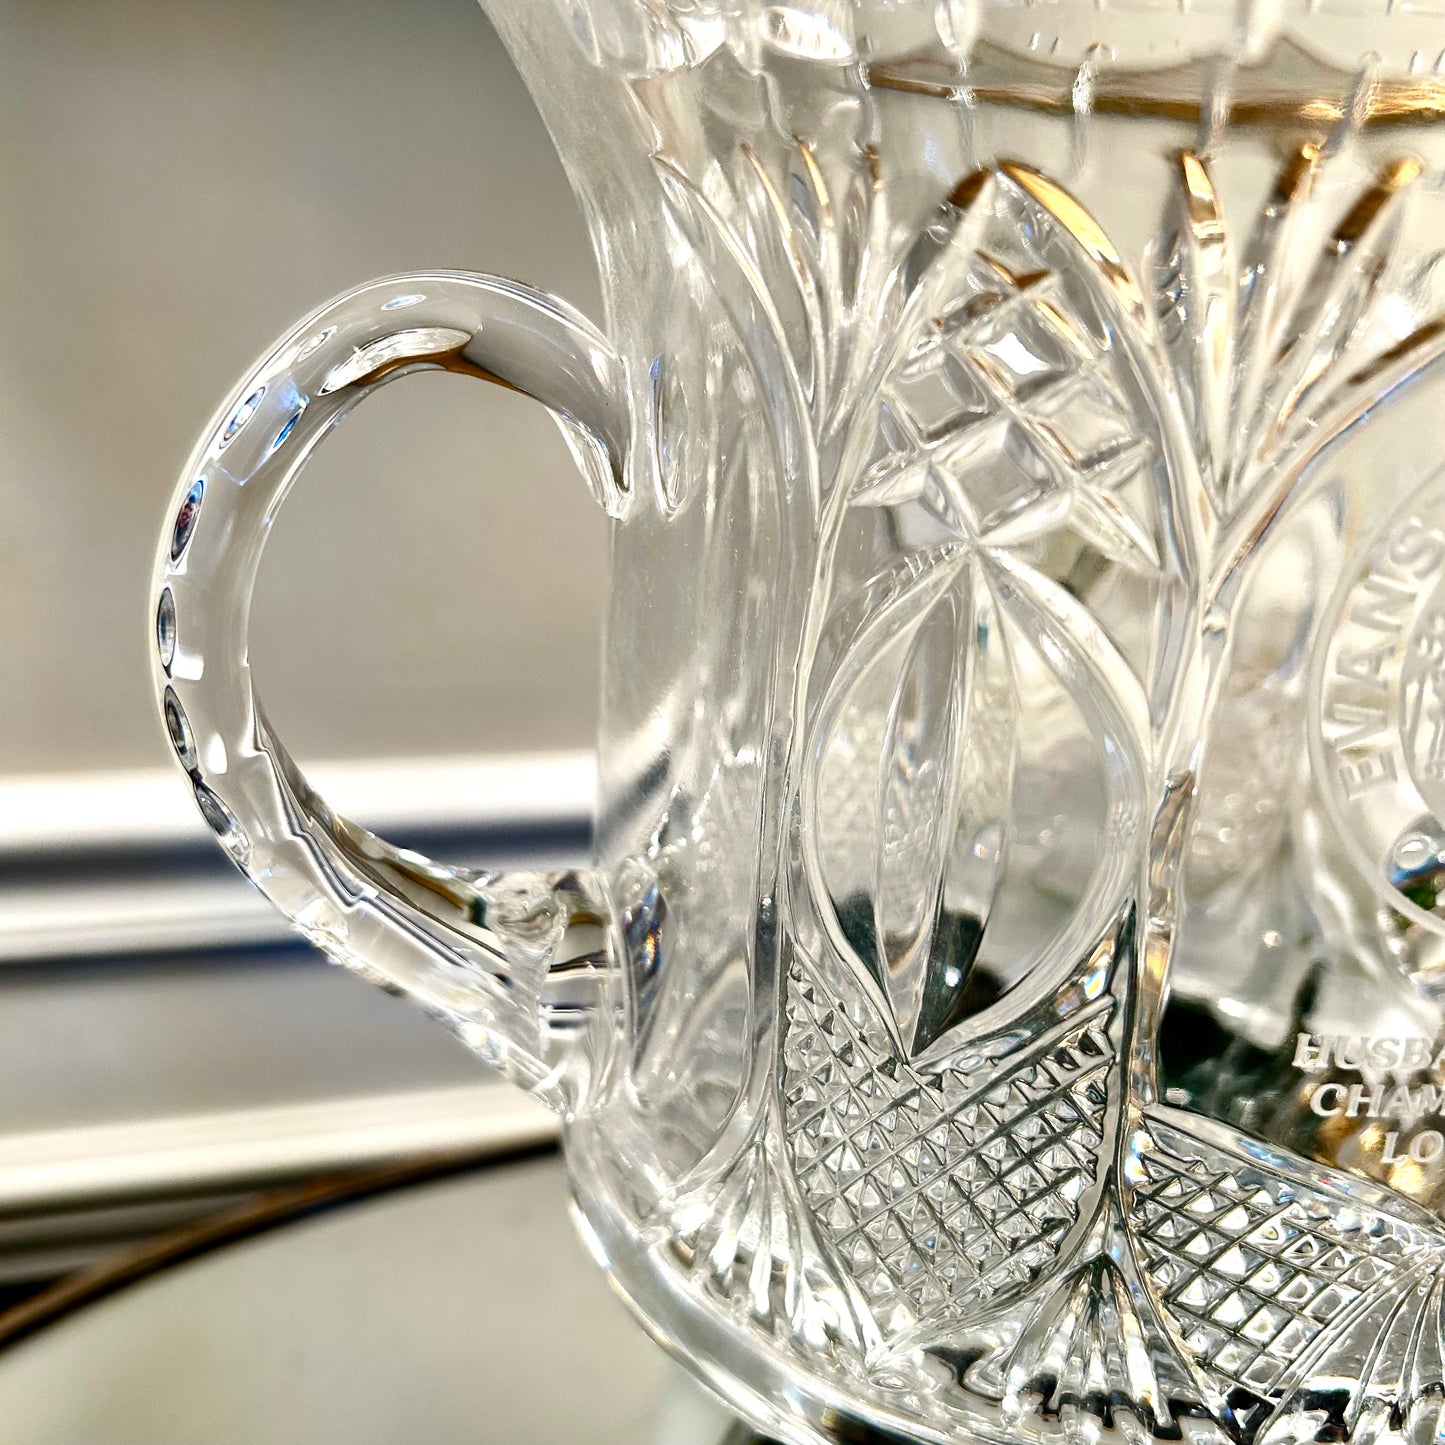 Stunning vintage crystal double handle monogrammed trophy vase champagne bucket